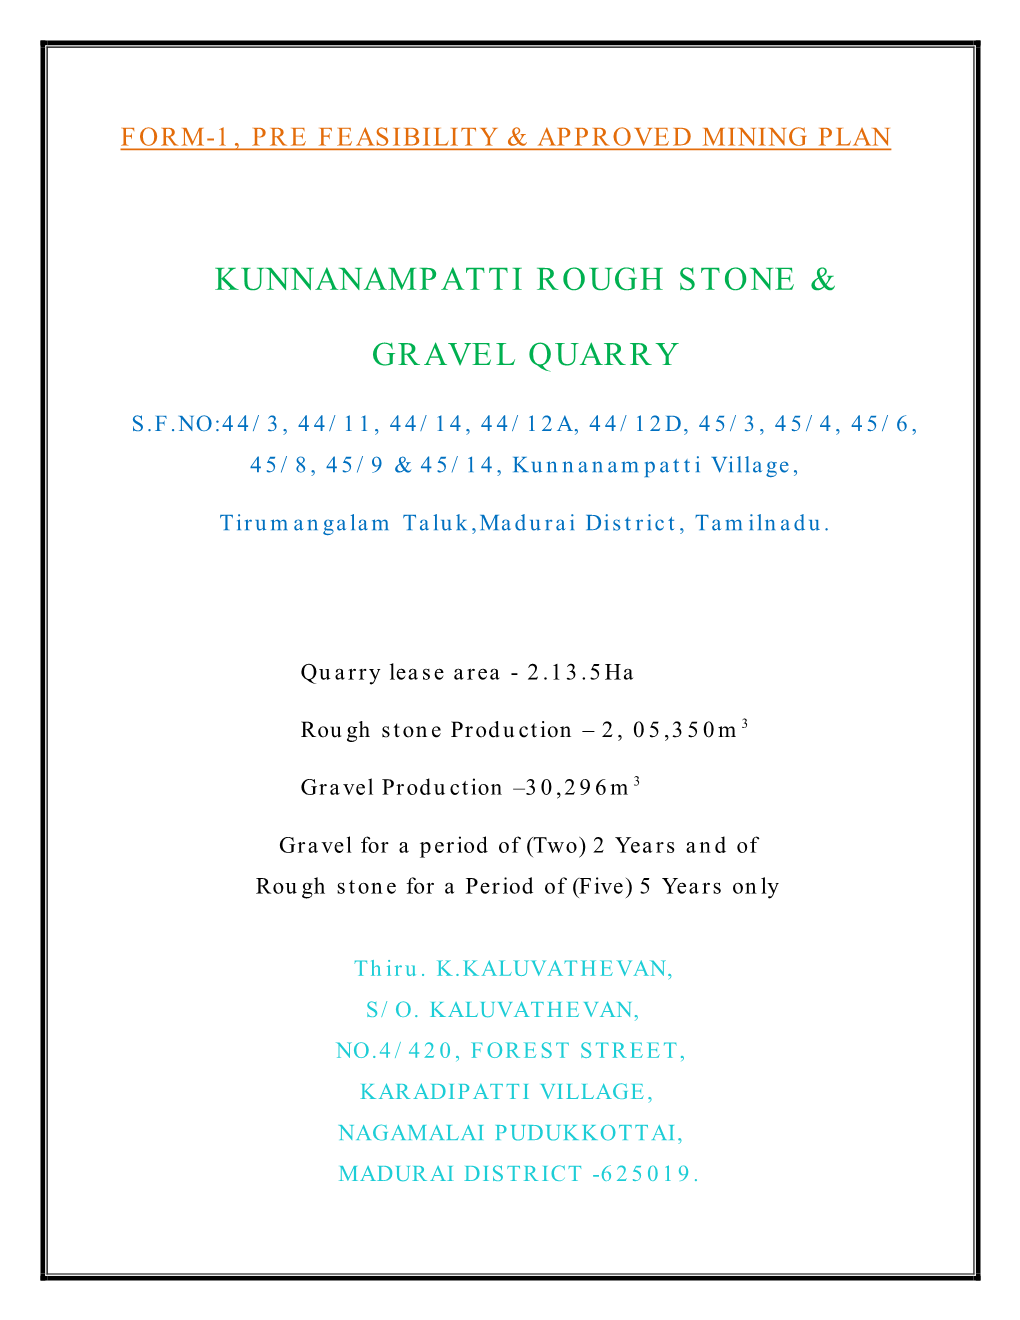 Kunnanampatti Rough Stone & Gravel Quarry